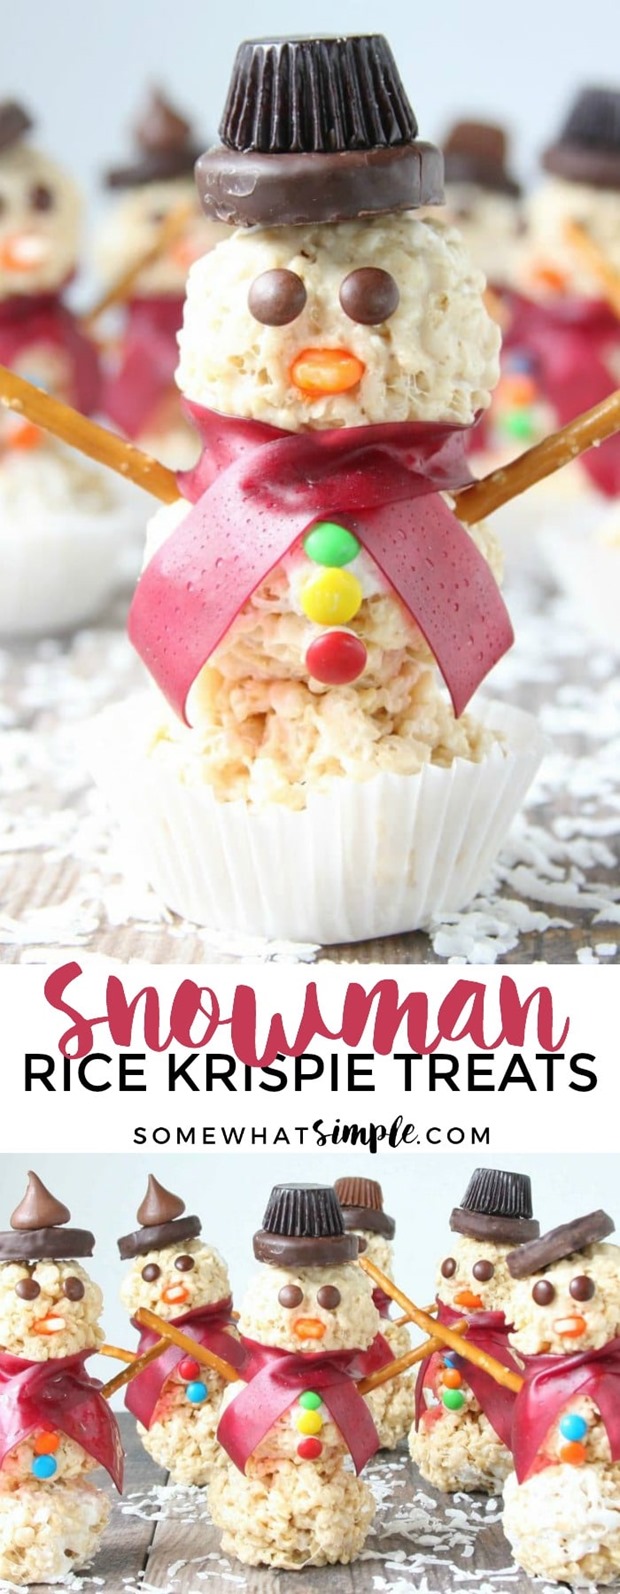 Snowman-Rice-Krispie-Treats